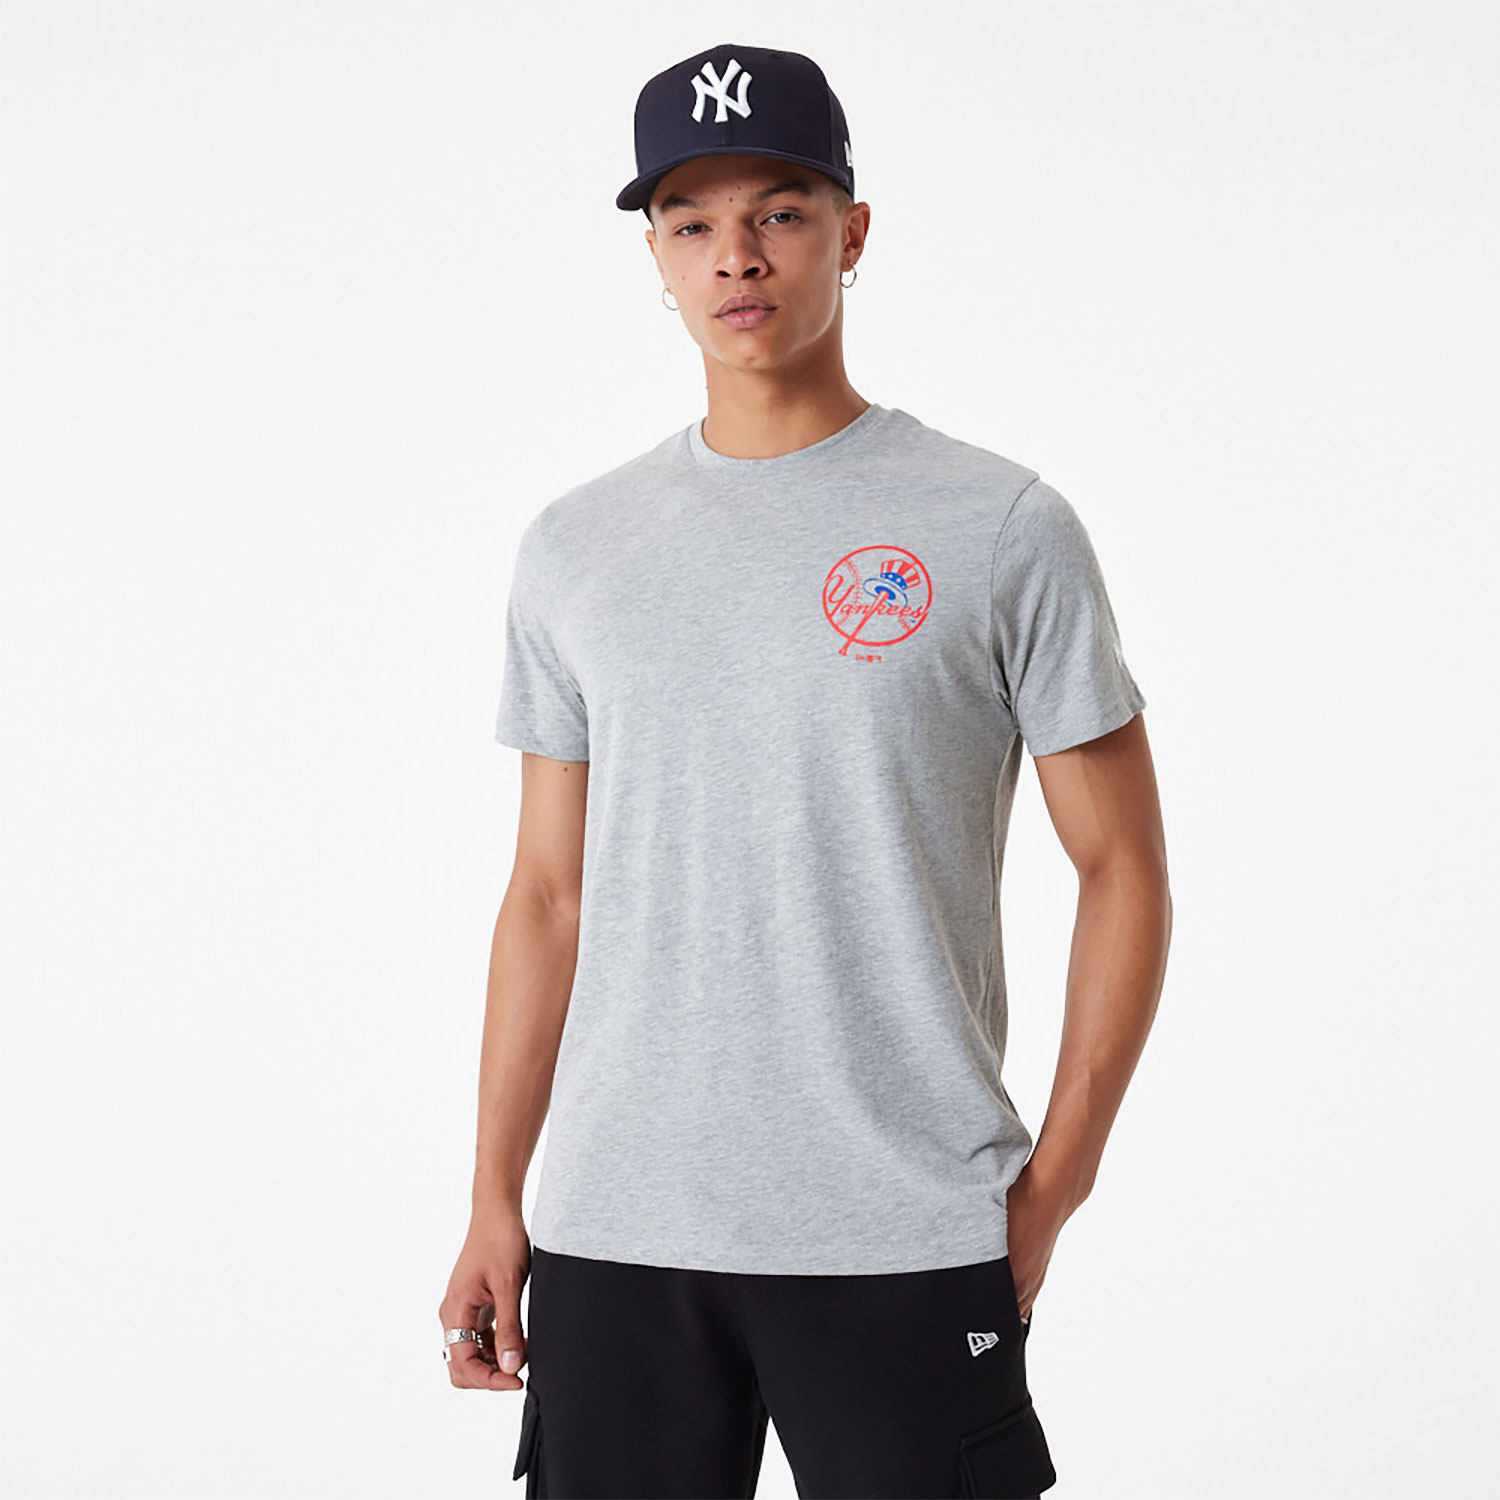 New York Yankees MLB Team Graphic Grey T-Shirt